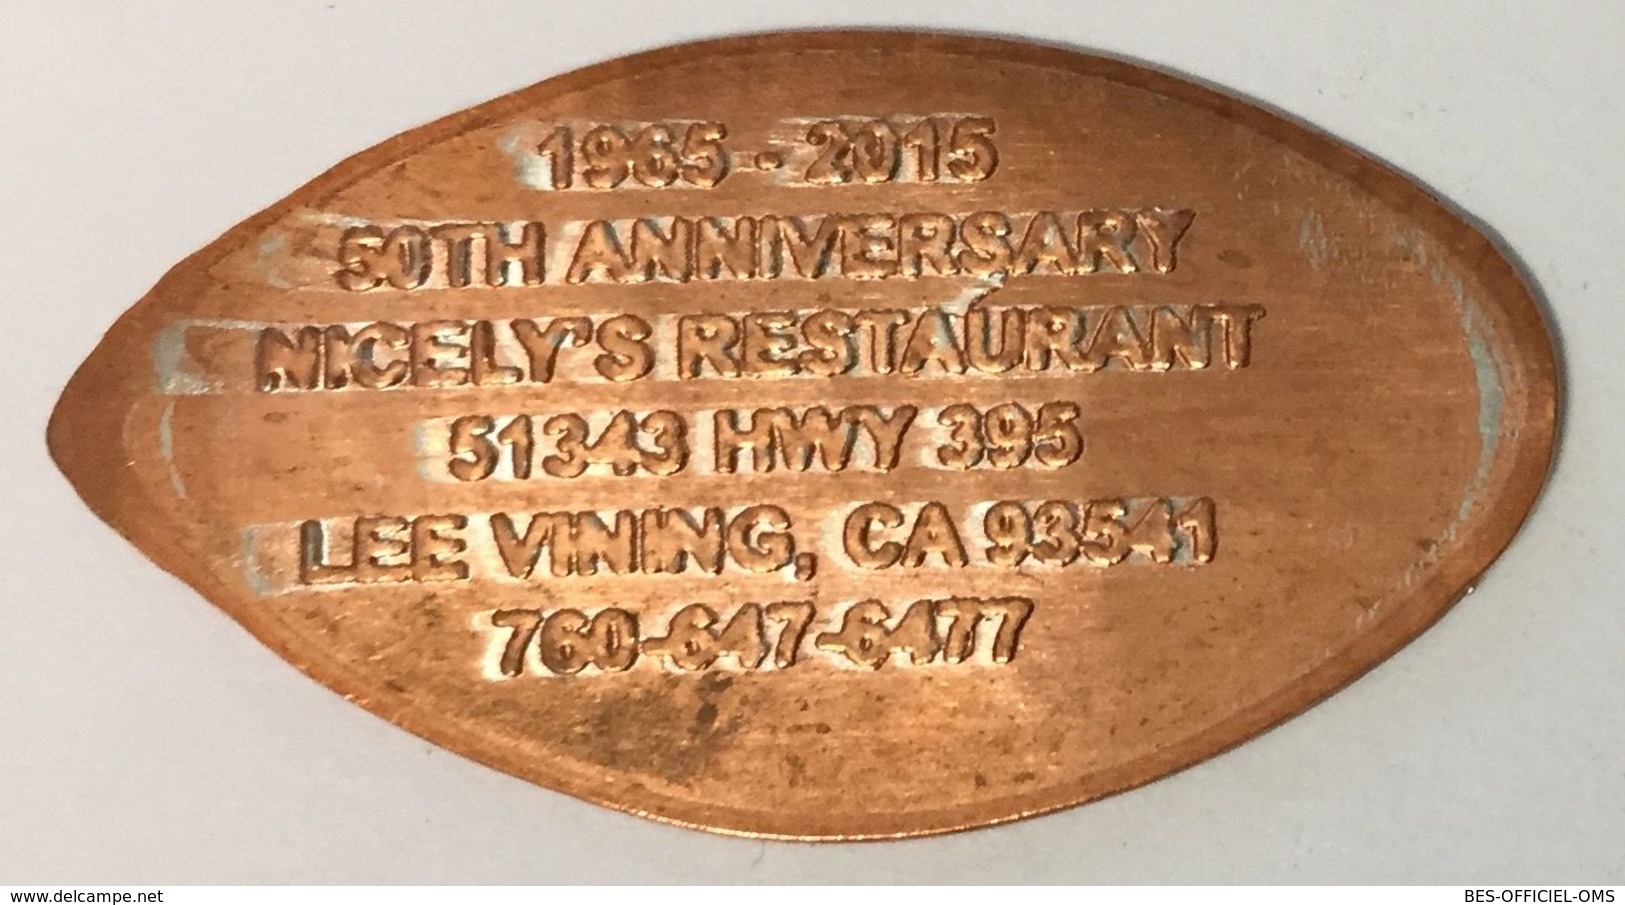 ÉTATS-UNIS USA MONO LAKE LEE VINING CA NICELY'S PENNY 1965-2015 ELONGATED COIN PIÈCE ÉCRASÉE MEDALS TOKENS - Pièces écrasées (Elongated Coins)